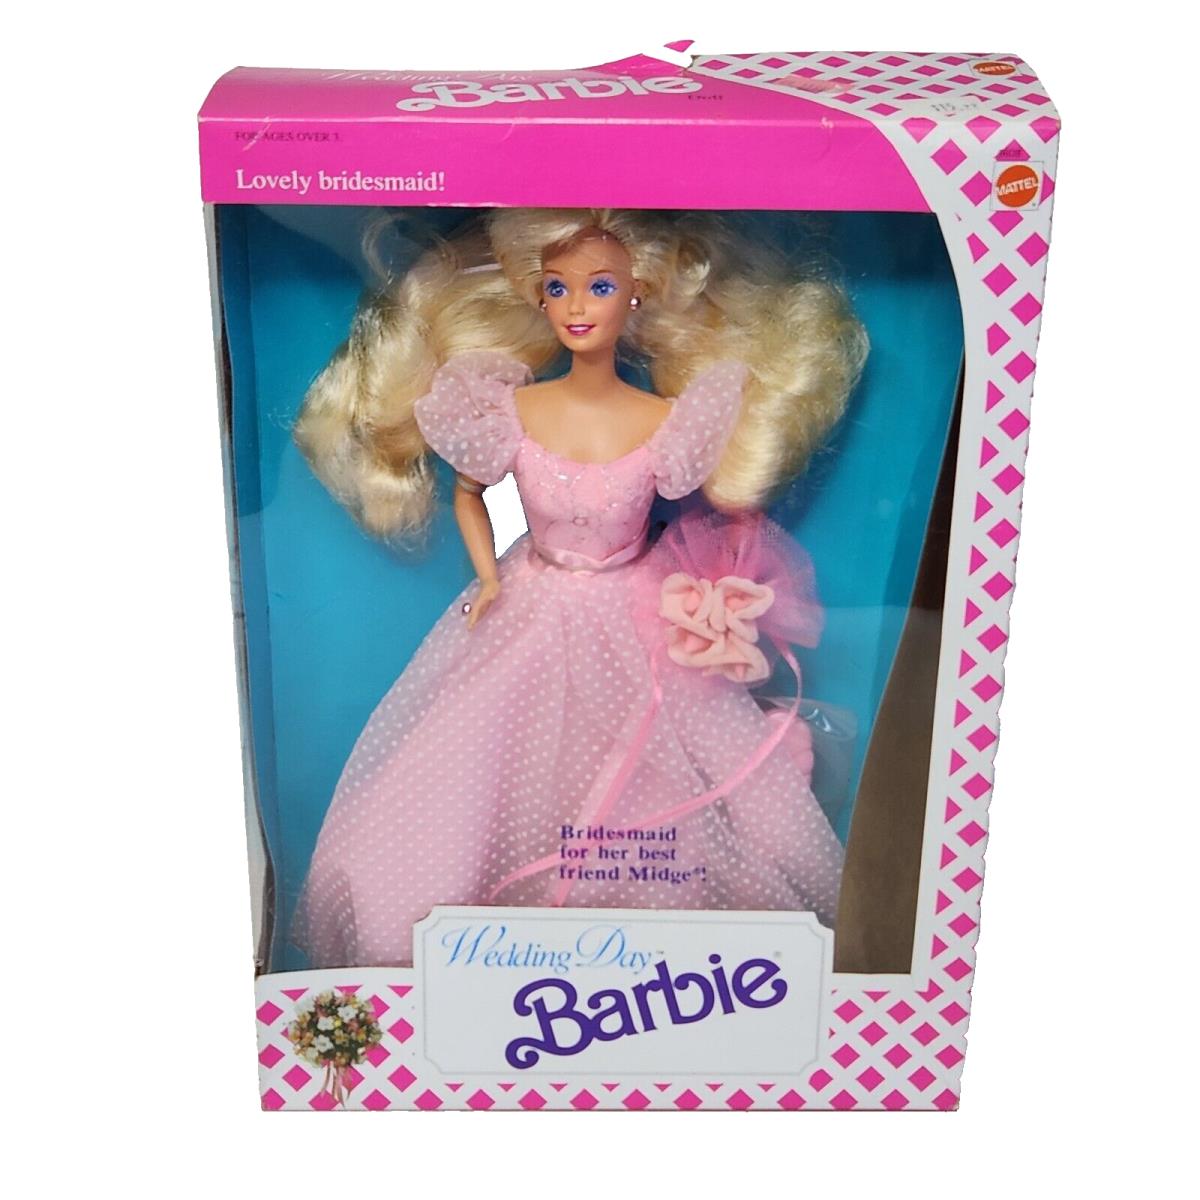 Vintage 1990 Wedding Day Barbie Doll Mattel Box 9608 Nos Creases